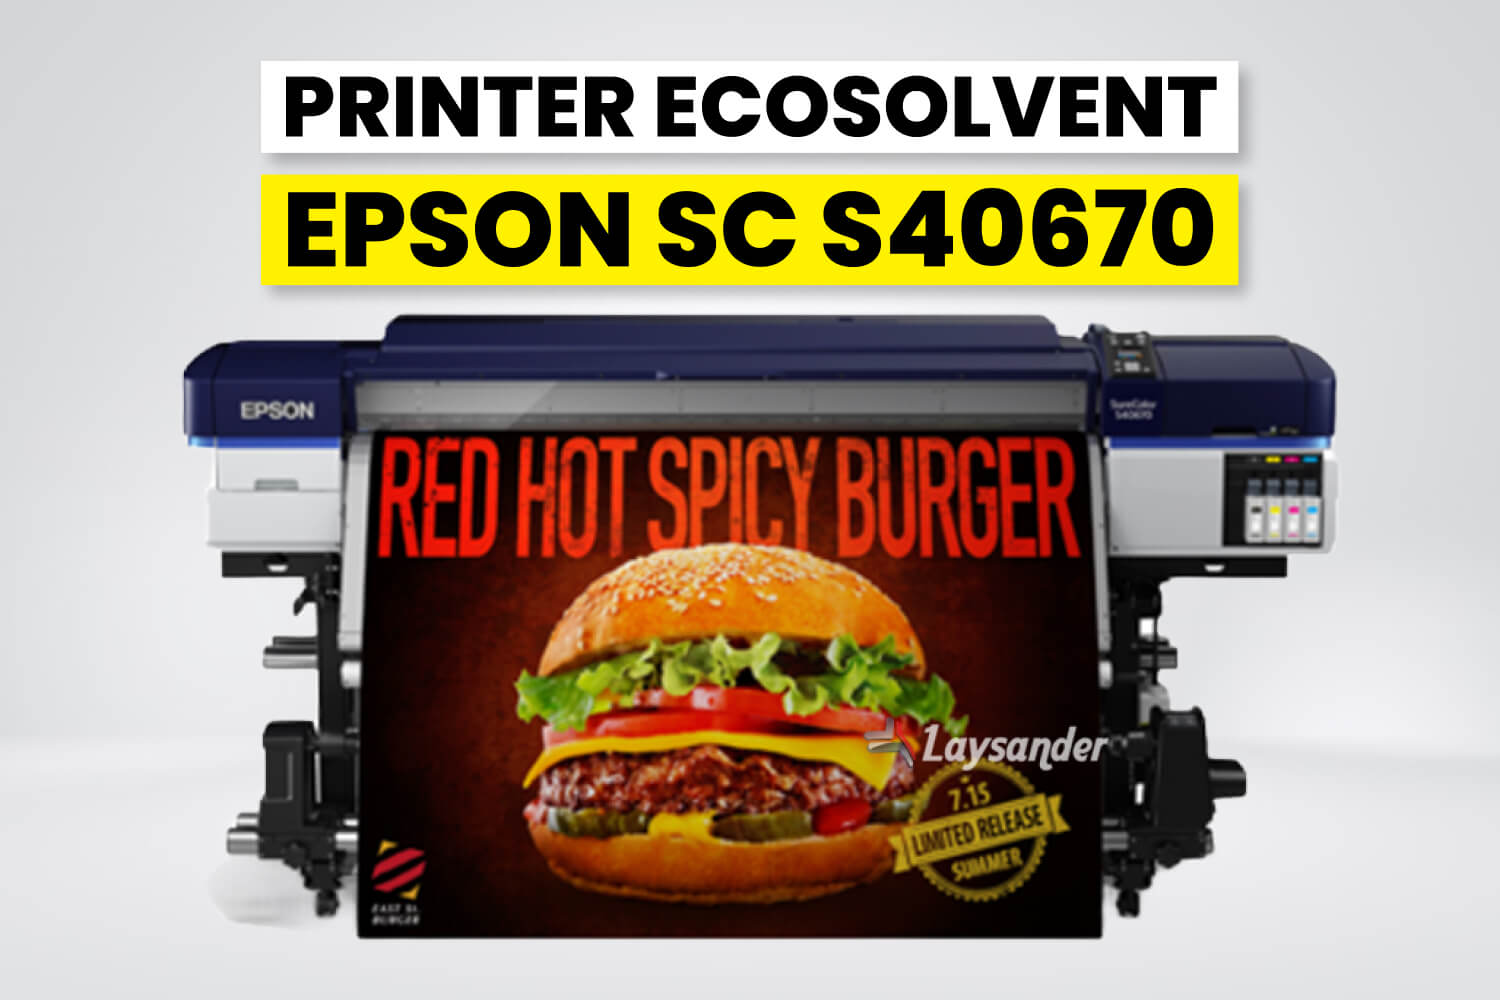 Printer Ecosolvent Epson Surecolor Sc-S40670